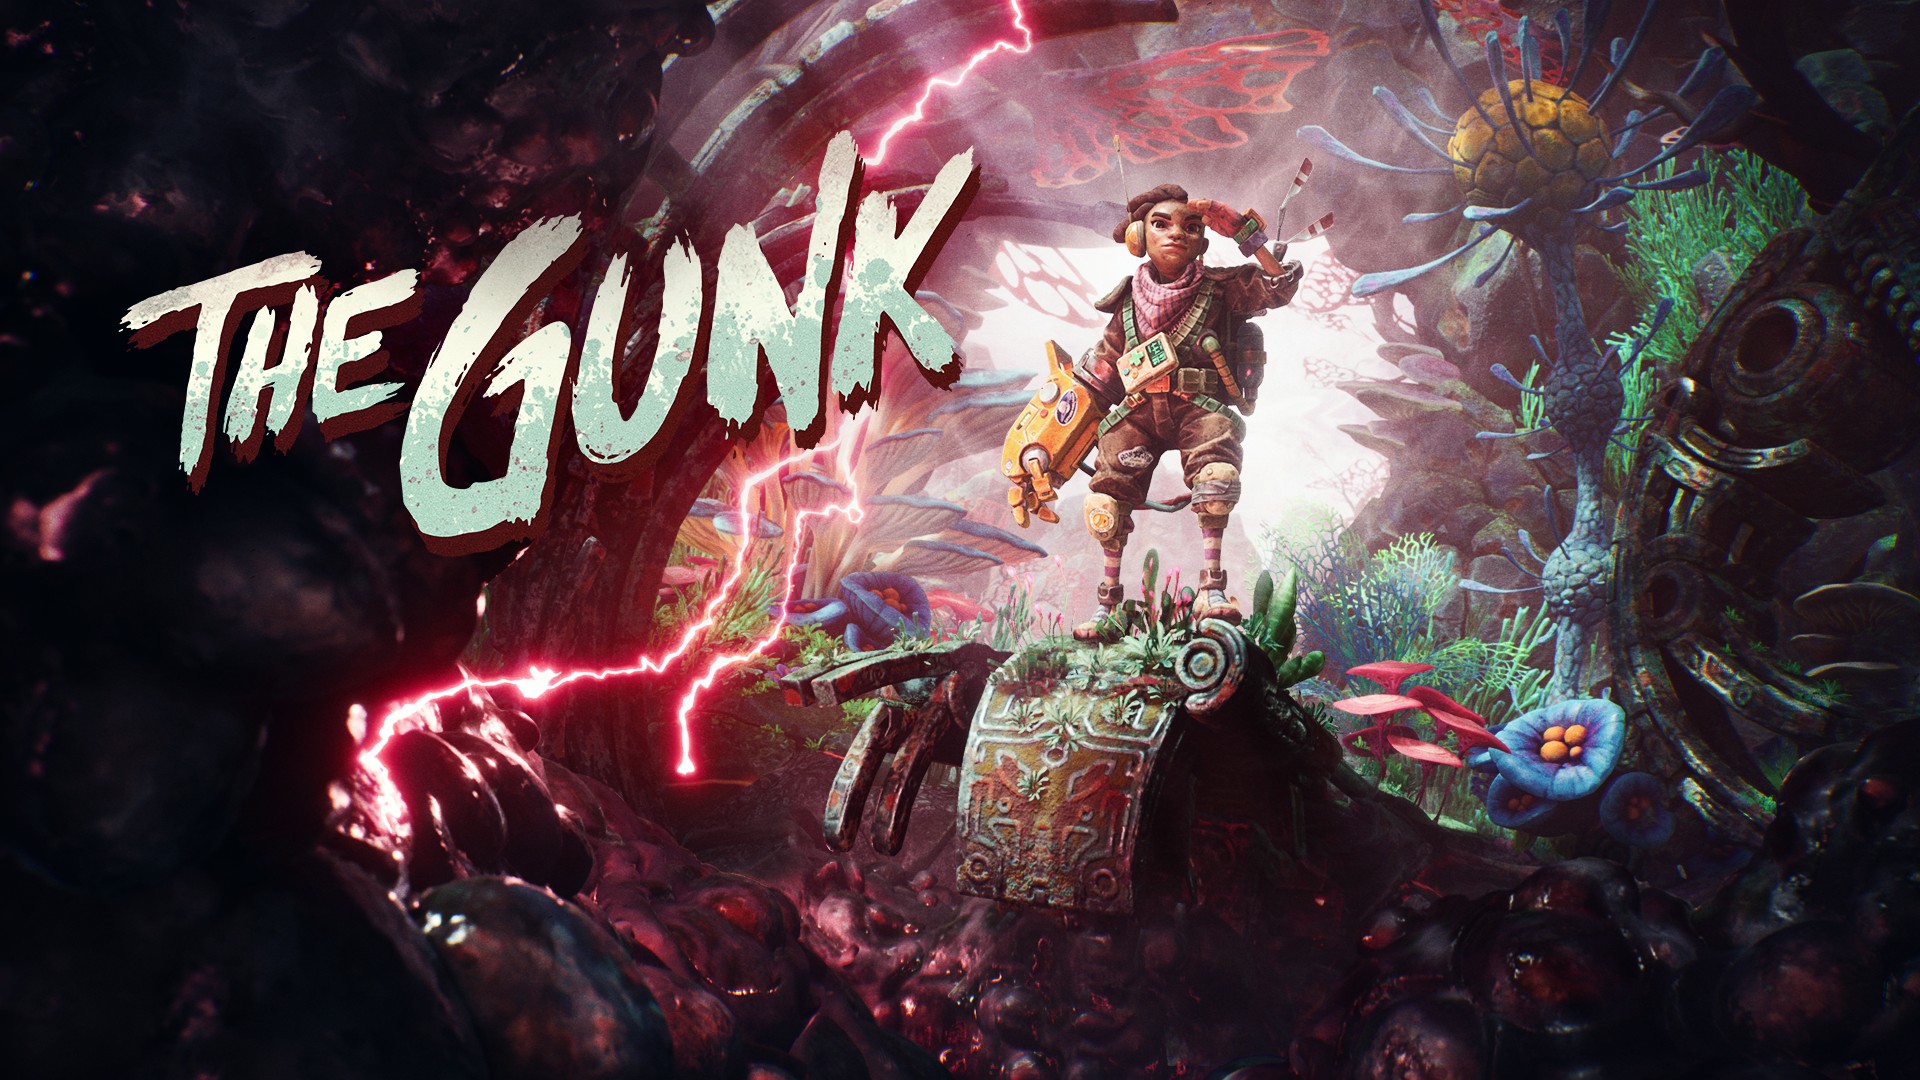 The Gunk Key Art